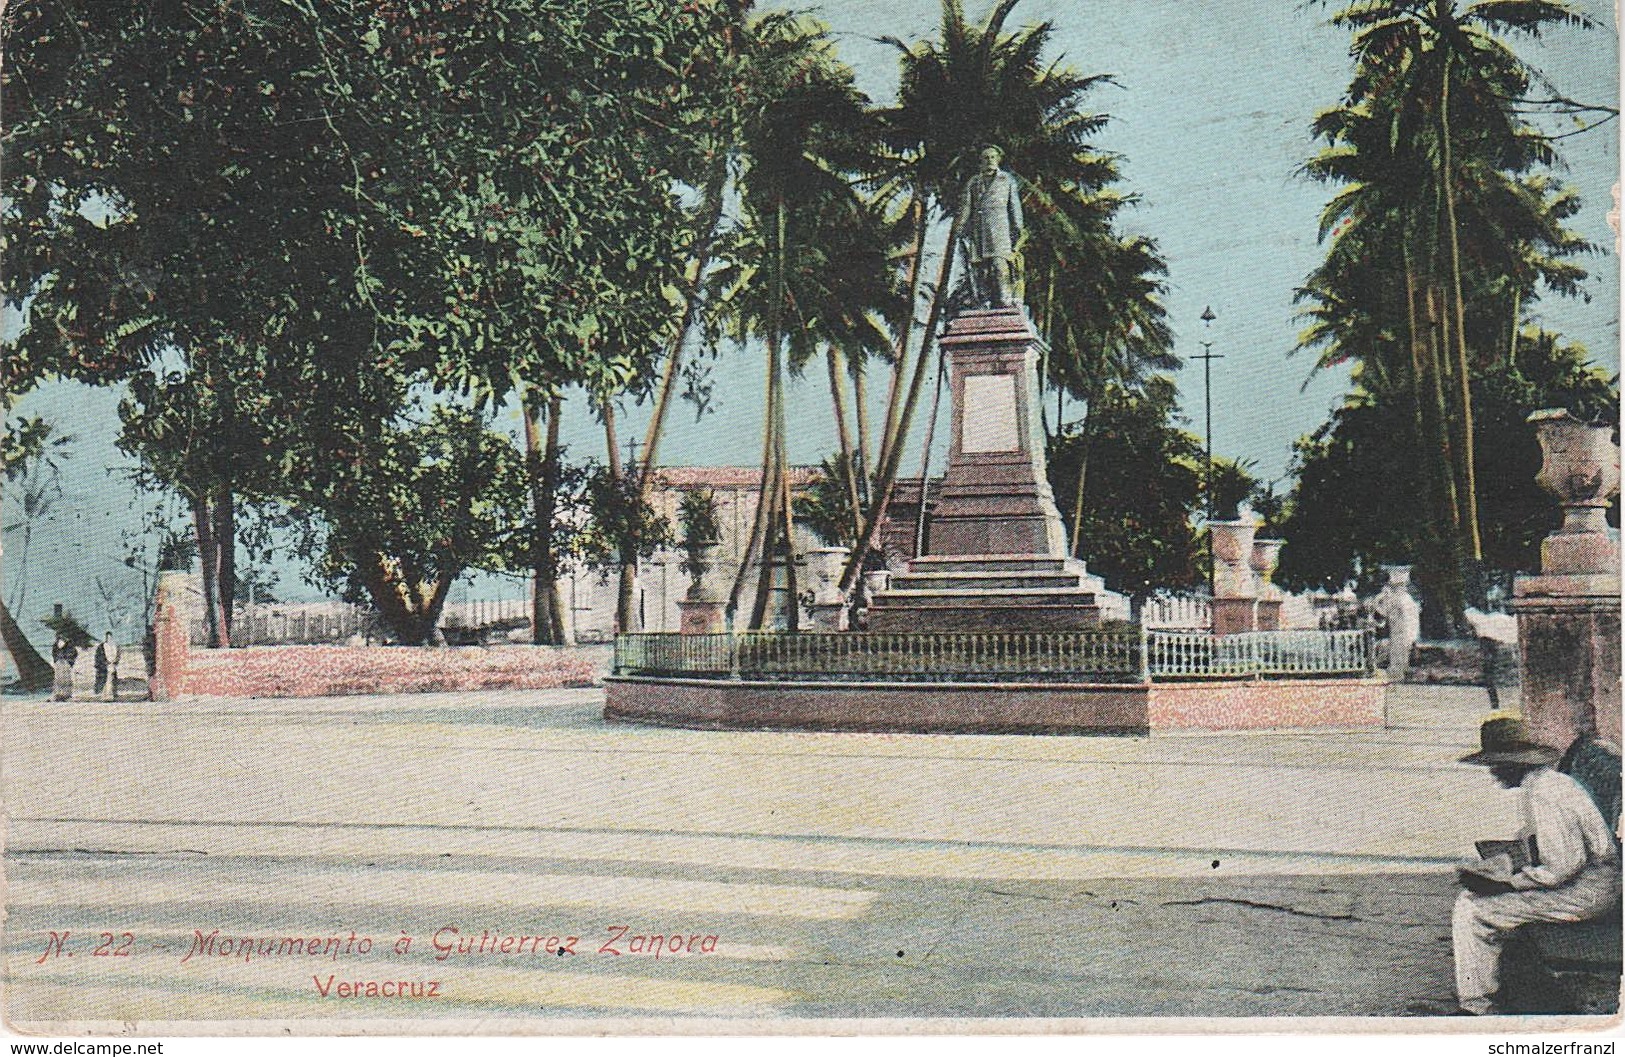 AK Veracruz Vera Cruz Monumento Estatua A Gutierrez Zanora Zamora Costa De Oro Boca Del Rio Mexiko Mexico Tarjeta Postal - México